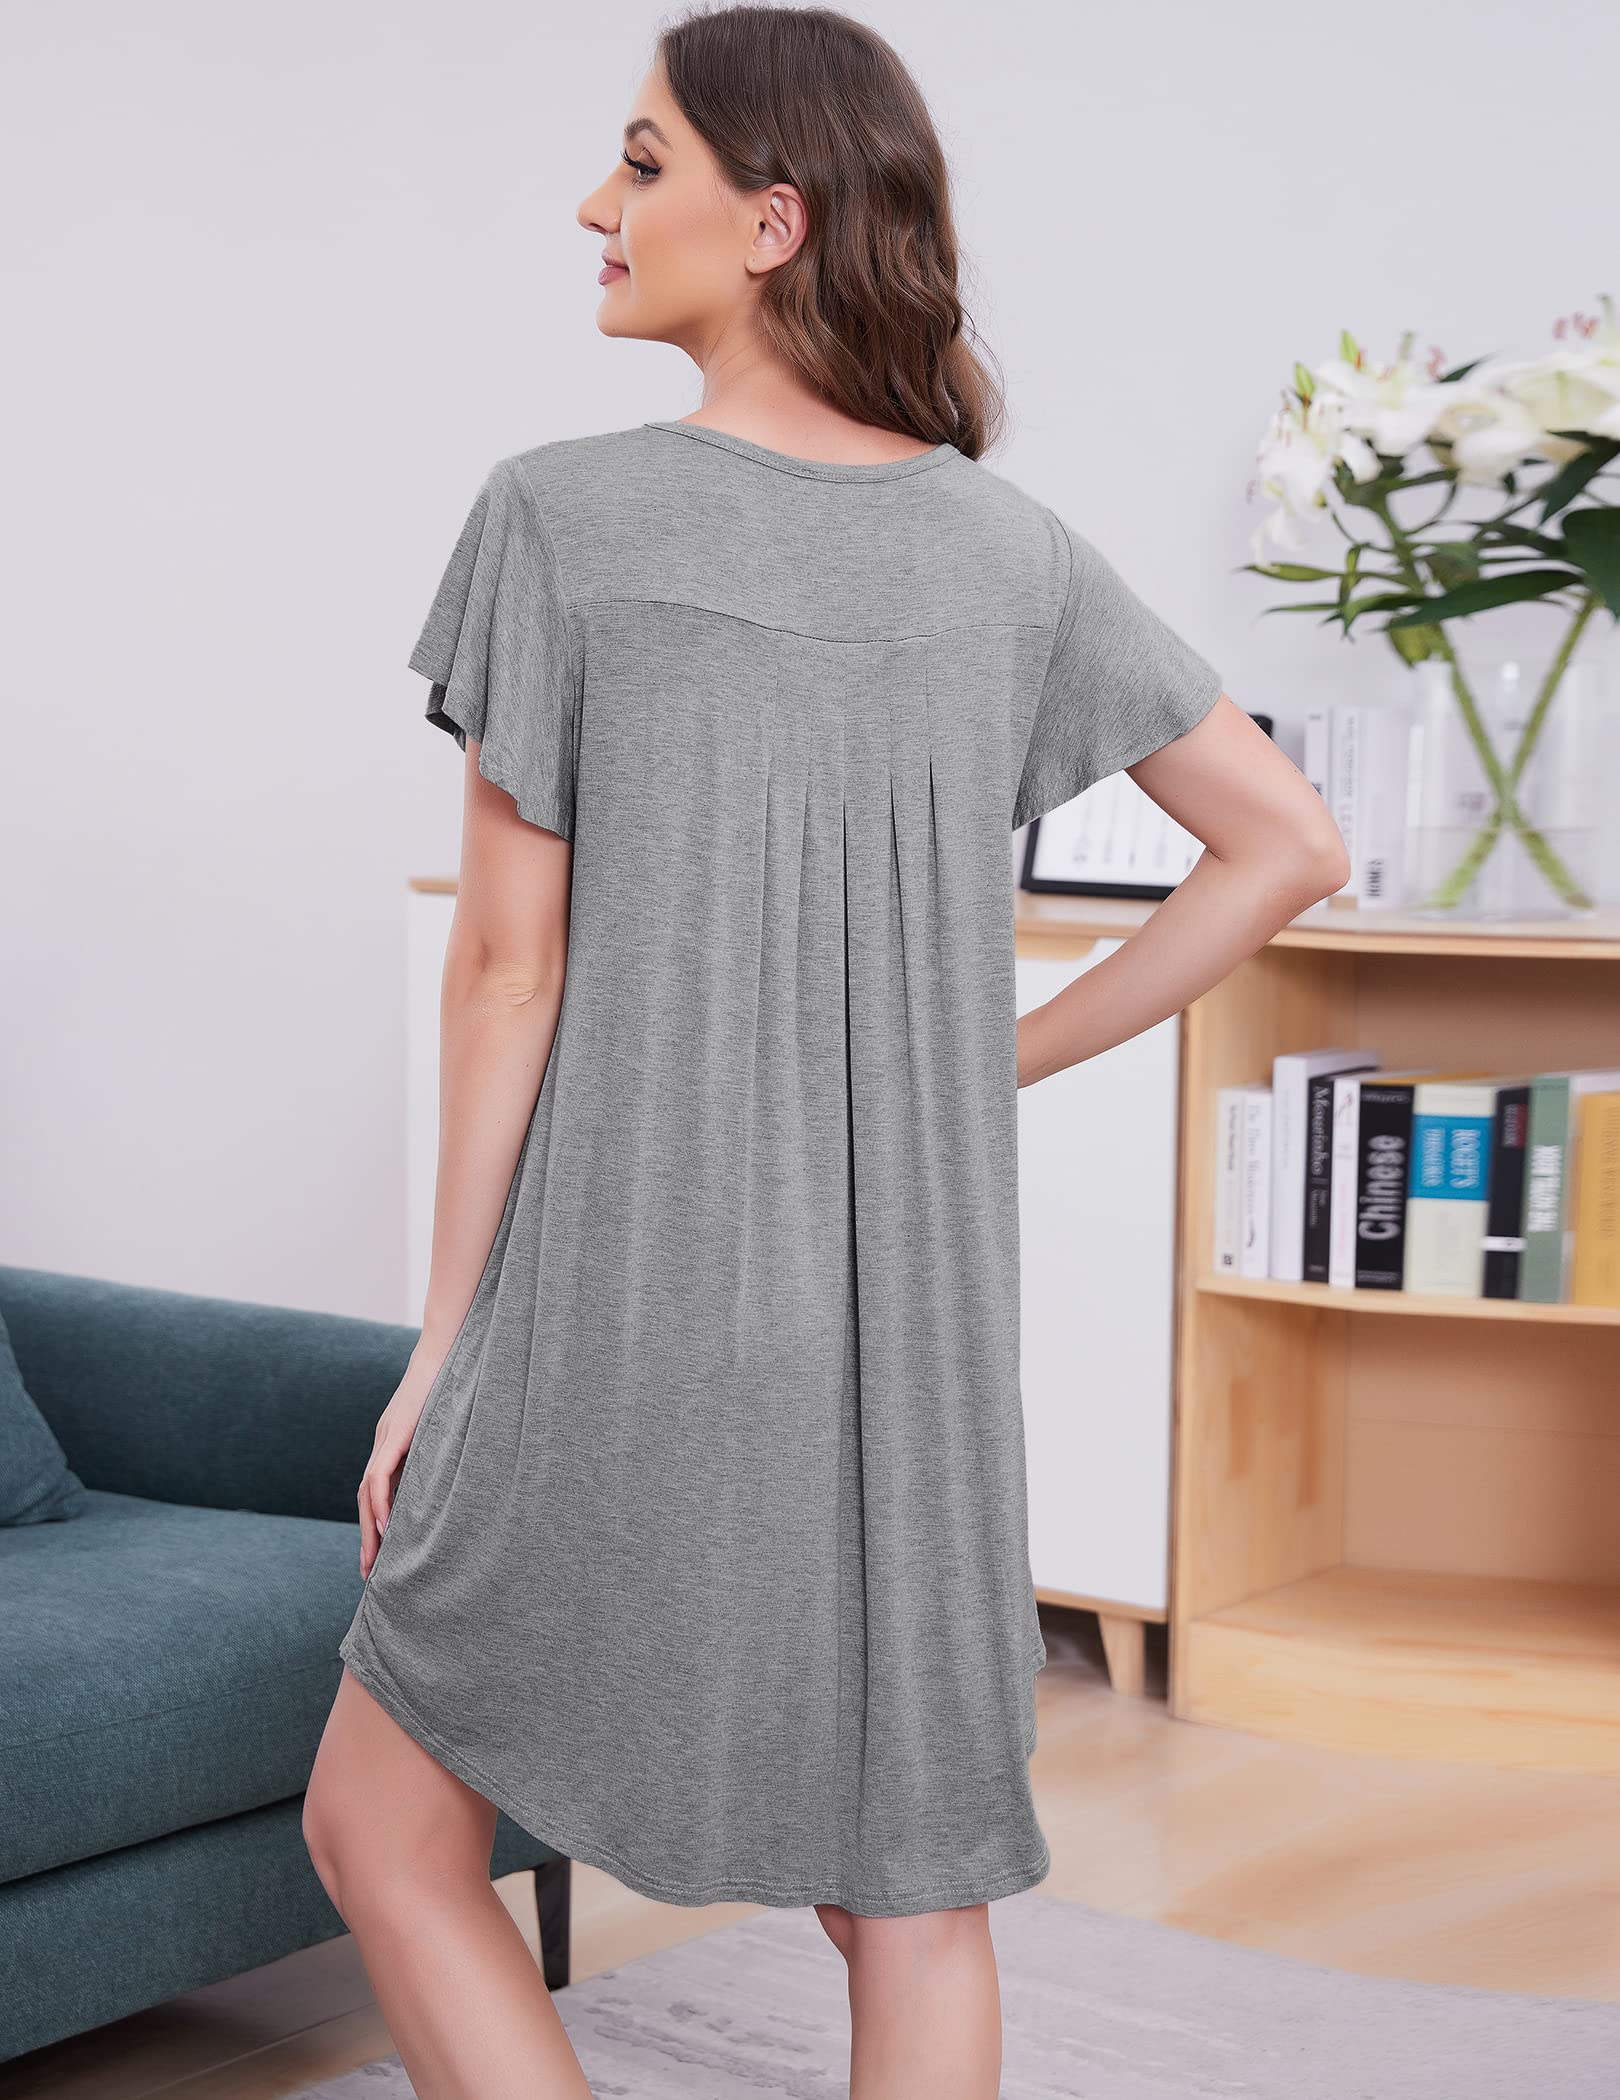 Womens Sleepshirt Soft Sleepwear (38)